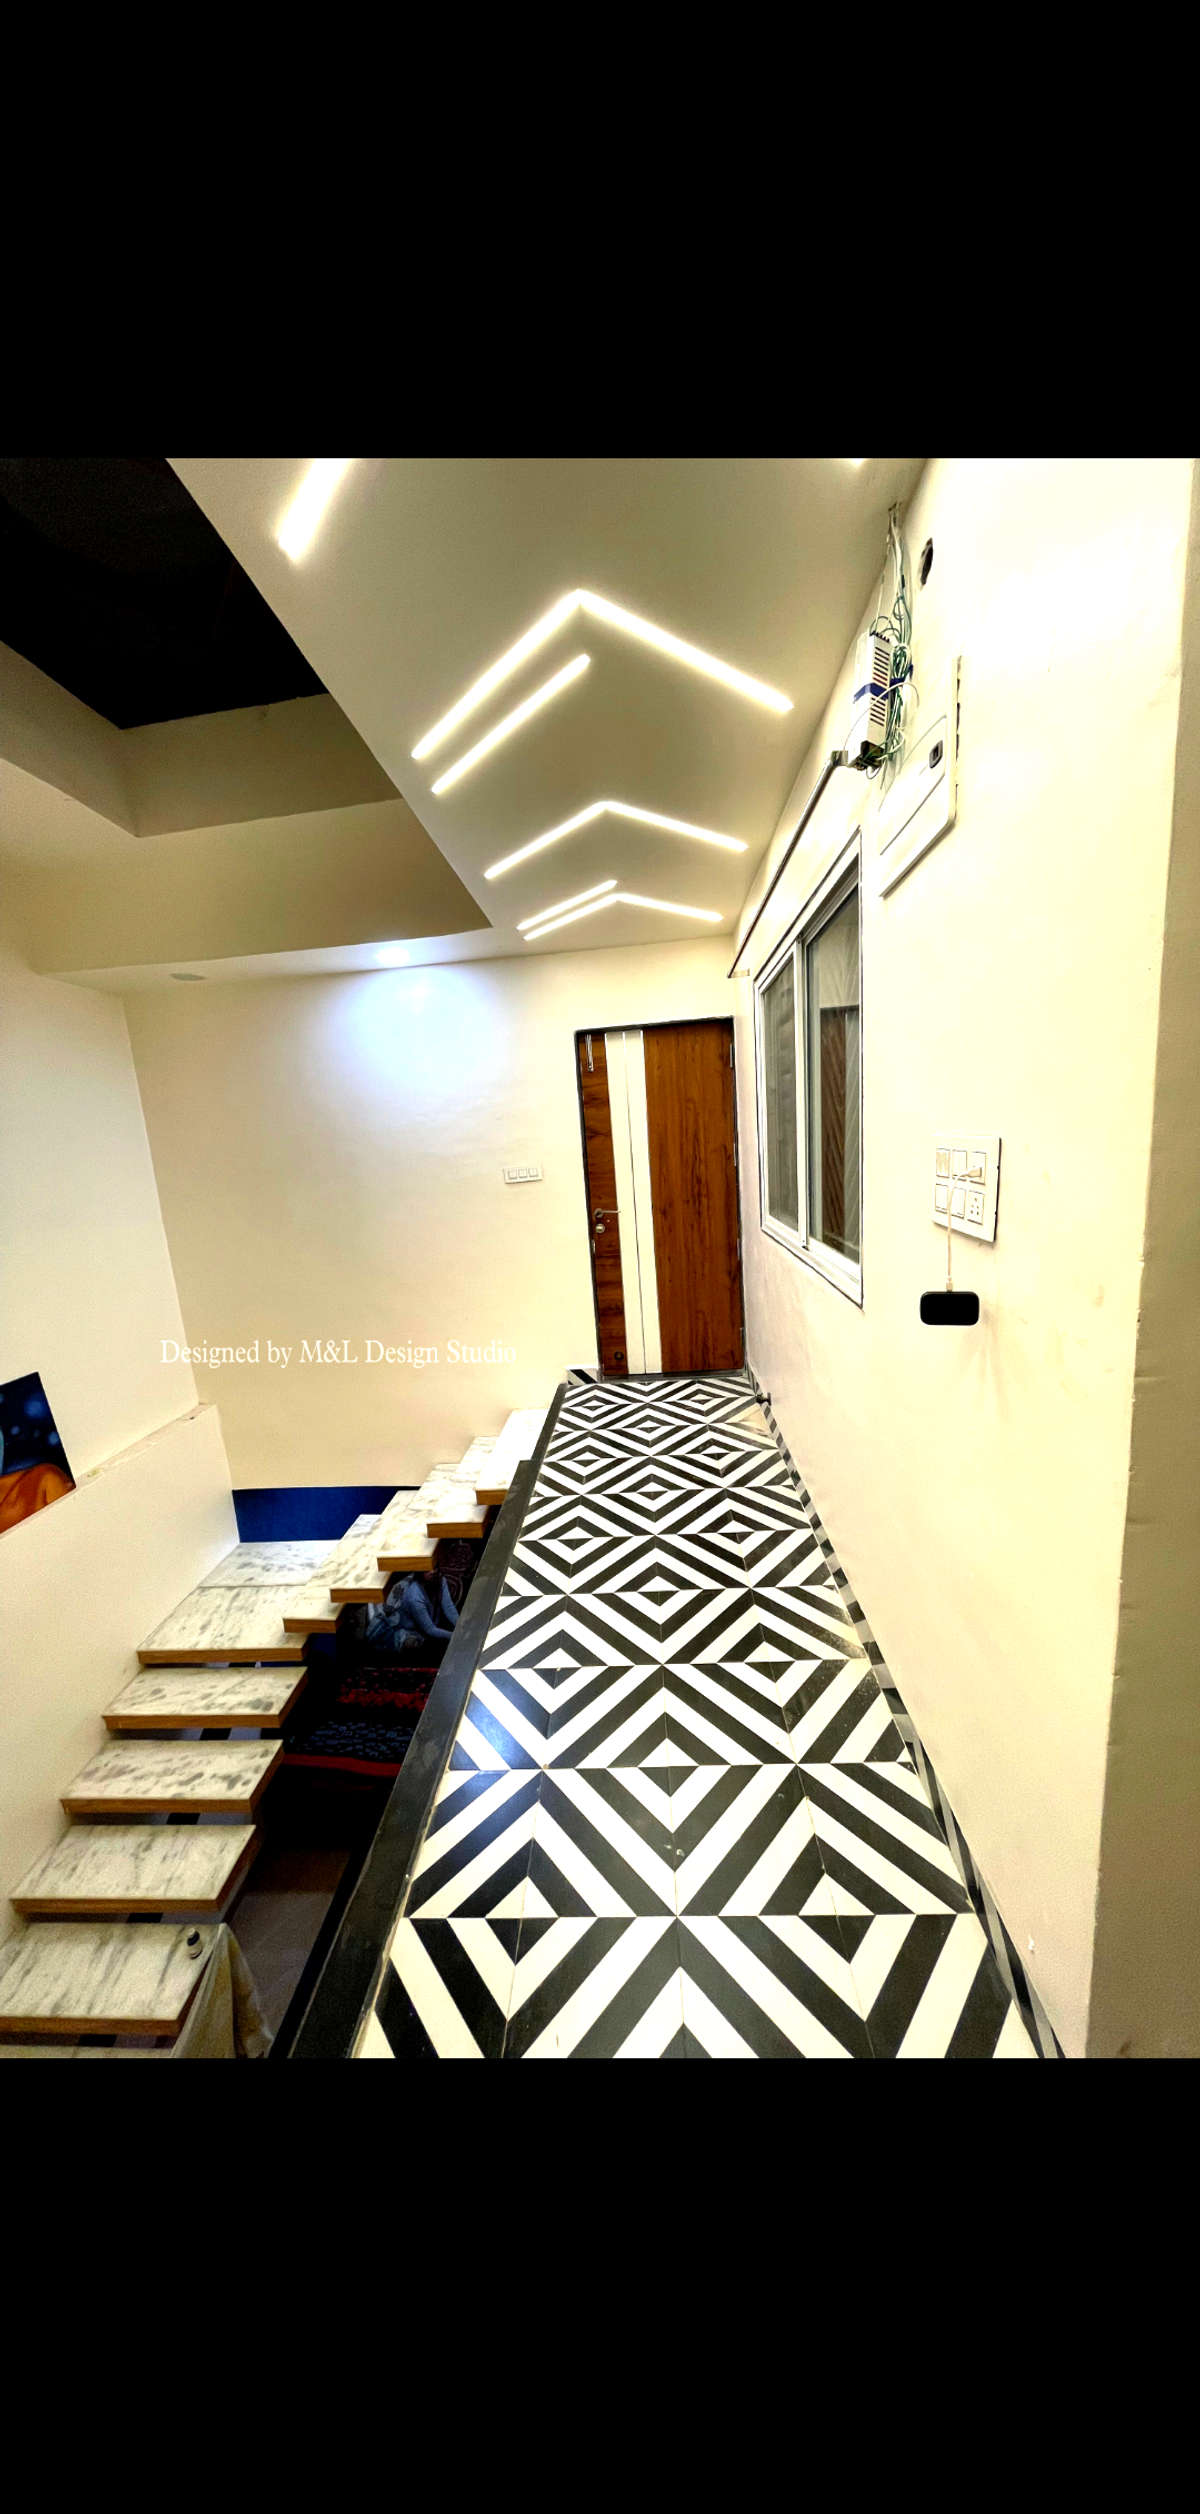 Geometry Pattern Passage Design by M&L design studio.
.
.
.
.
#InteriorDesigner  #LUXURY_INTERIOR  #passage  #FlooringTiles  #FloorPlans  #Designs  #InteriorDesigne  #geometrics  #StaircaseDecors  #CelingLights  #profilelights  #FrenchDoor  #MarbleFlooring  #floathouse